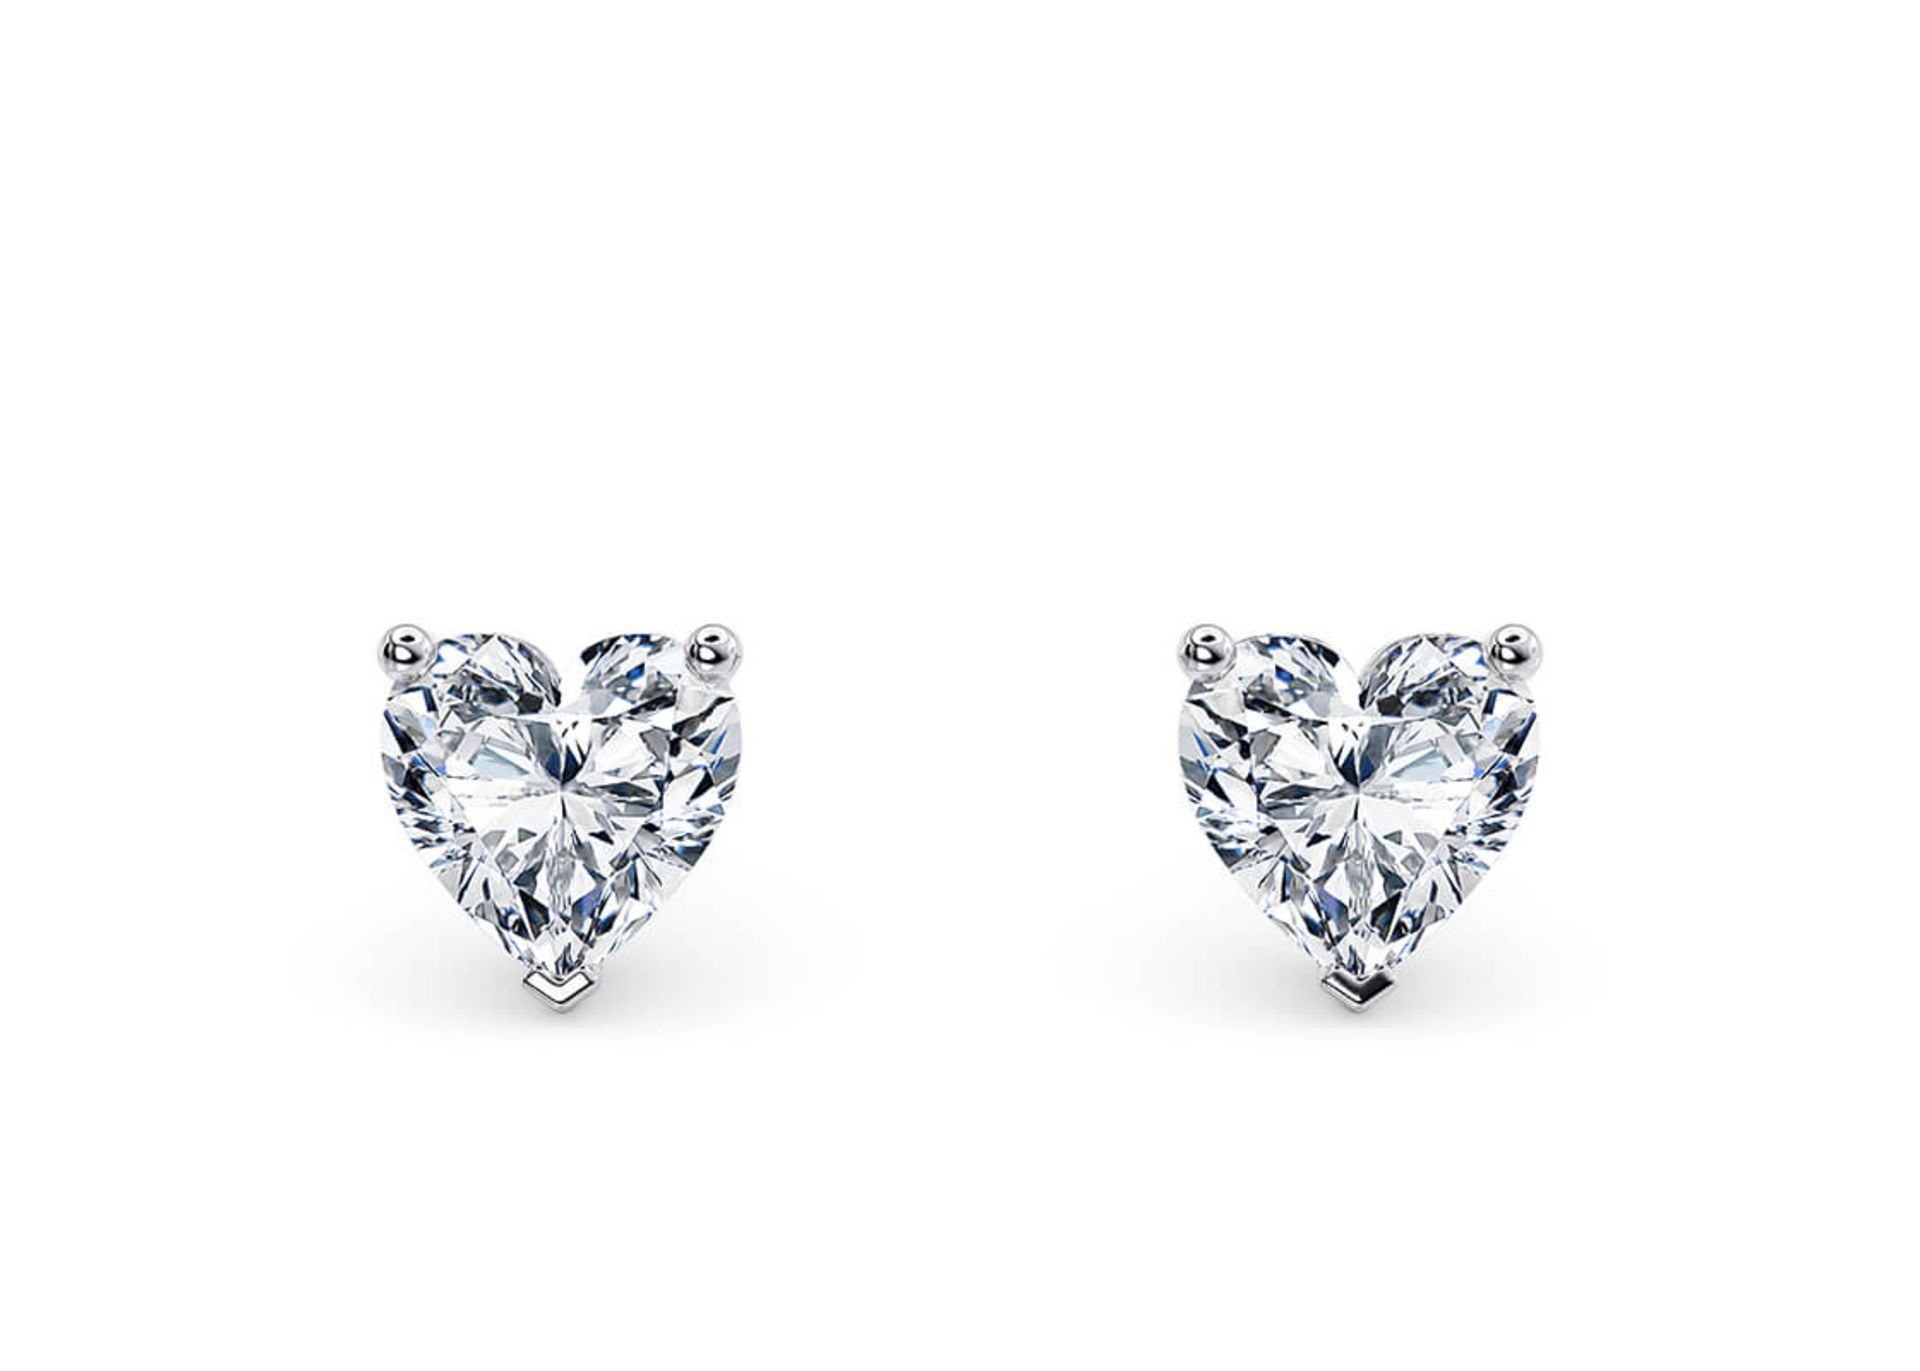 Round Brilliant Cut 4.00 Carat Diamond Earrings Set in 18kt White Gold - D Colour SI1 Clarity - IGI